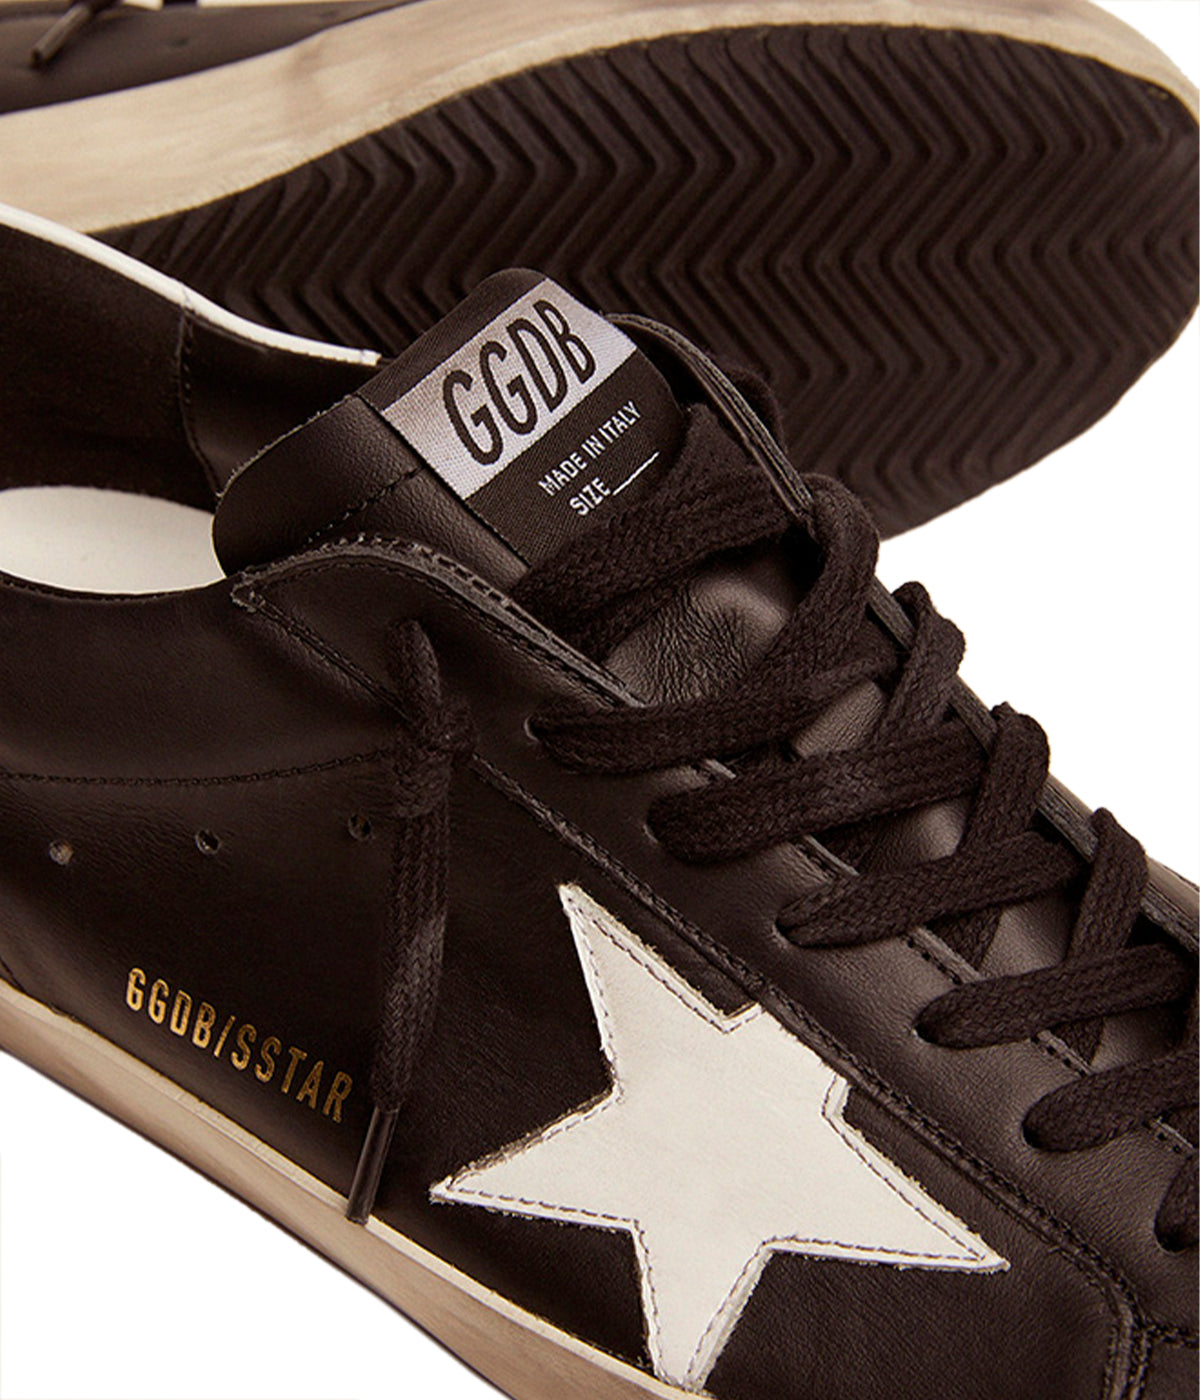 Super-Star Shiny Leather Sneaker in Black & White